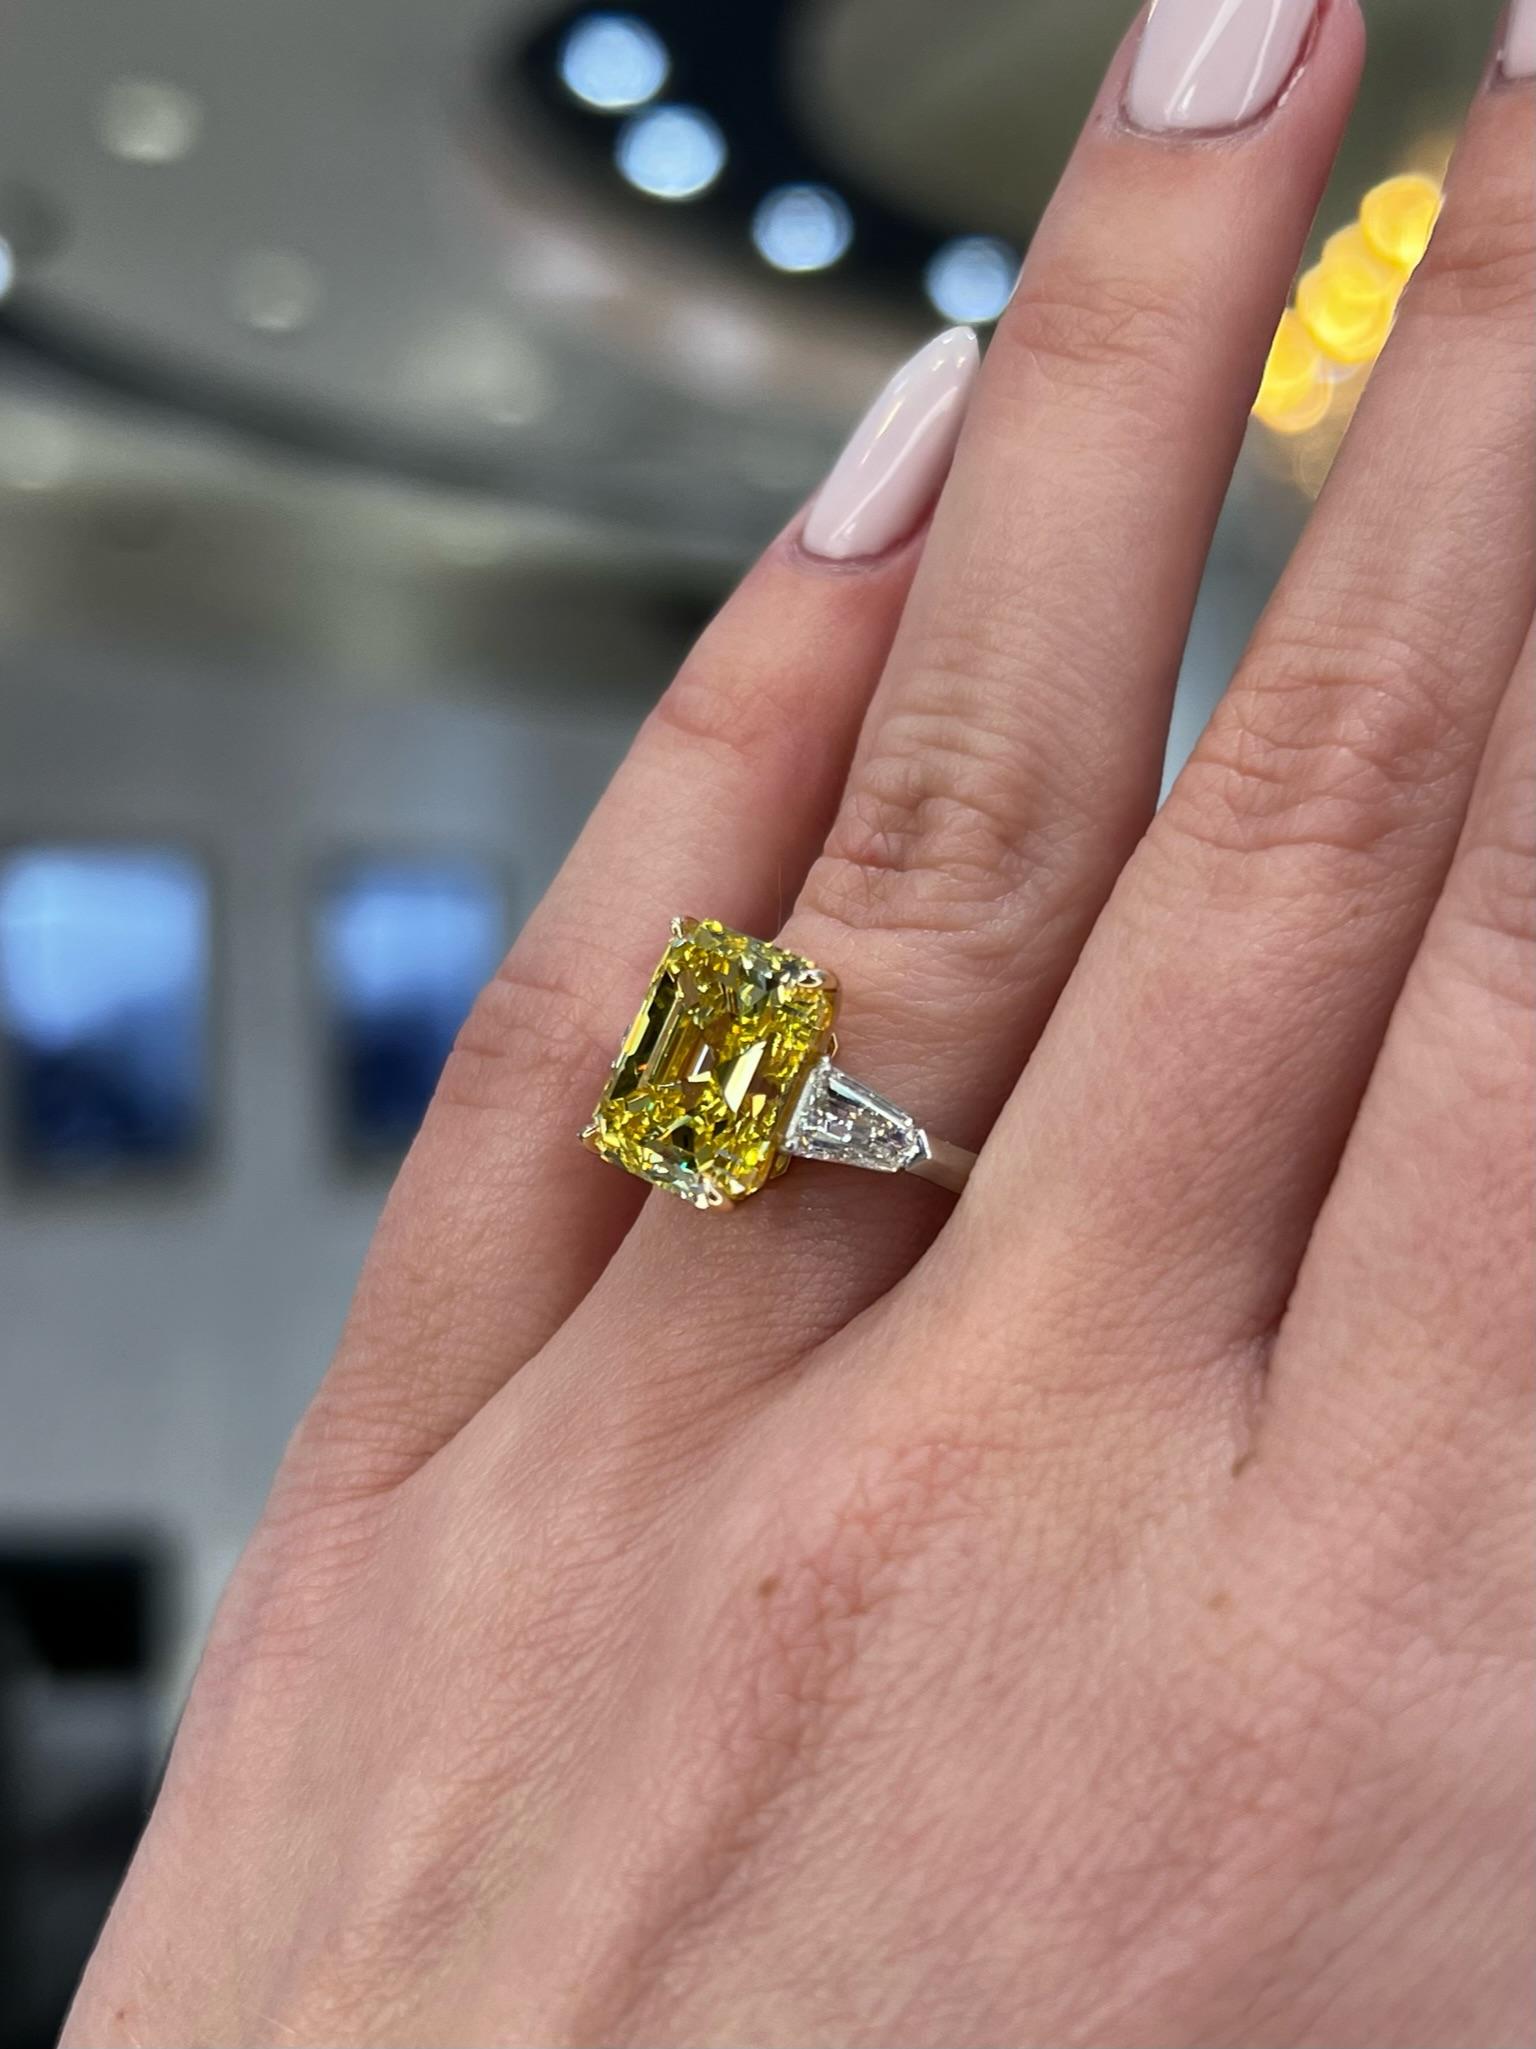 David Rosenberg 6.40ct Emerald Fancy Vivid Yellow GIA Diamond Engagement Ring For Sale 3